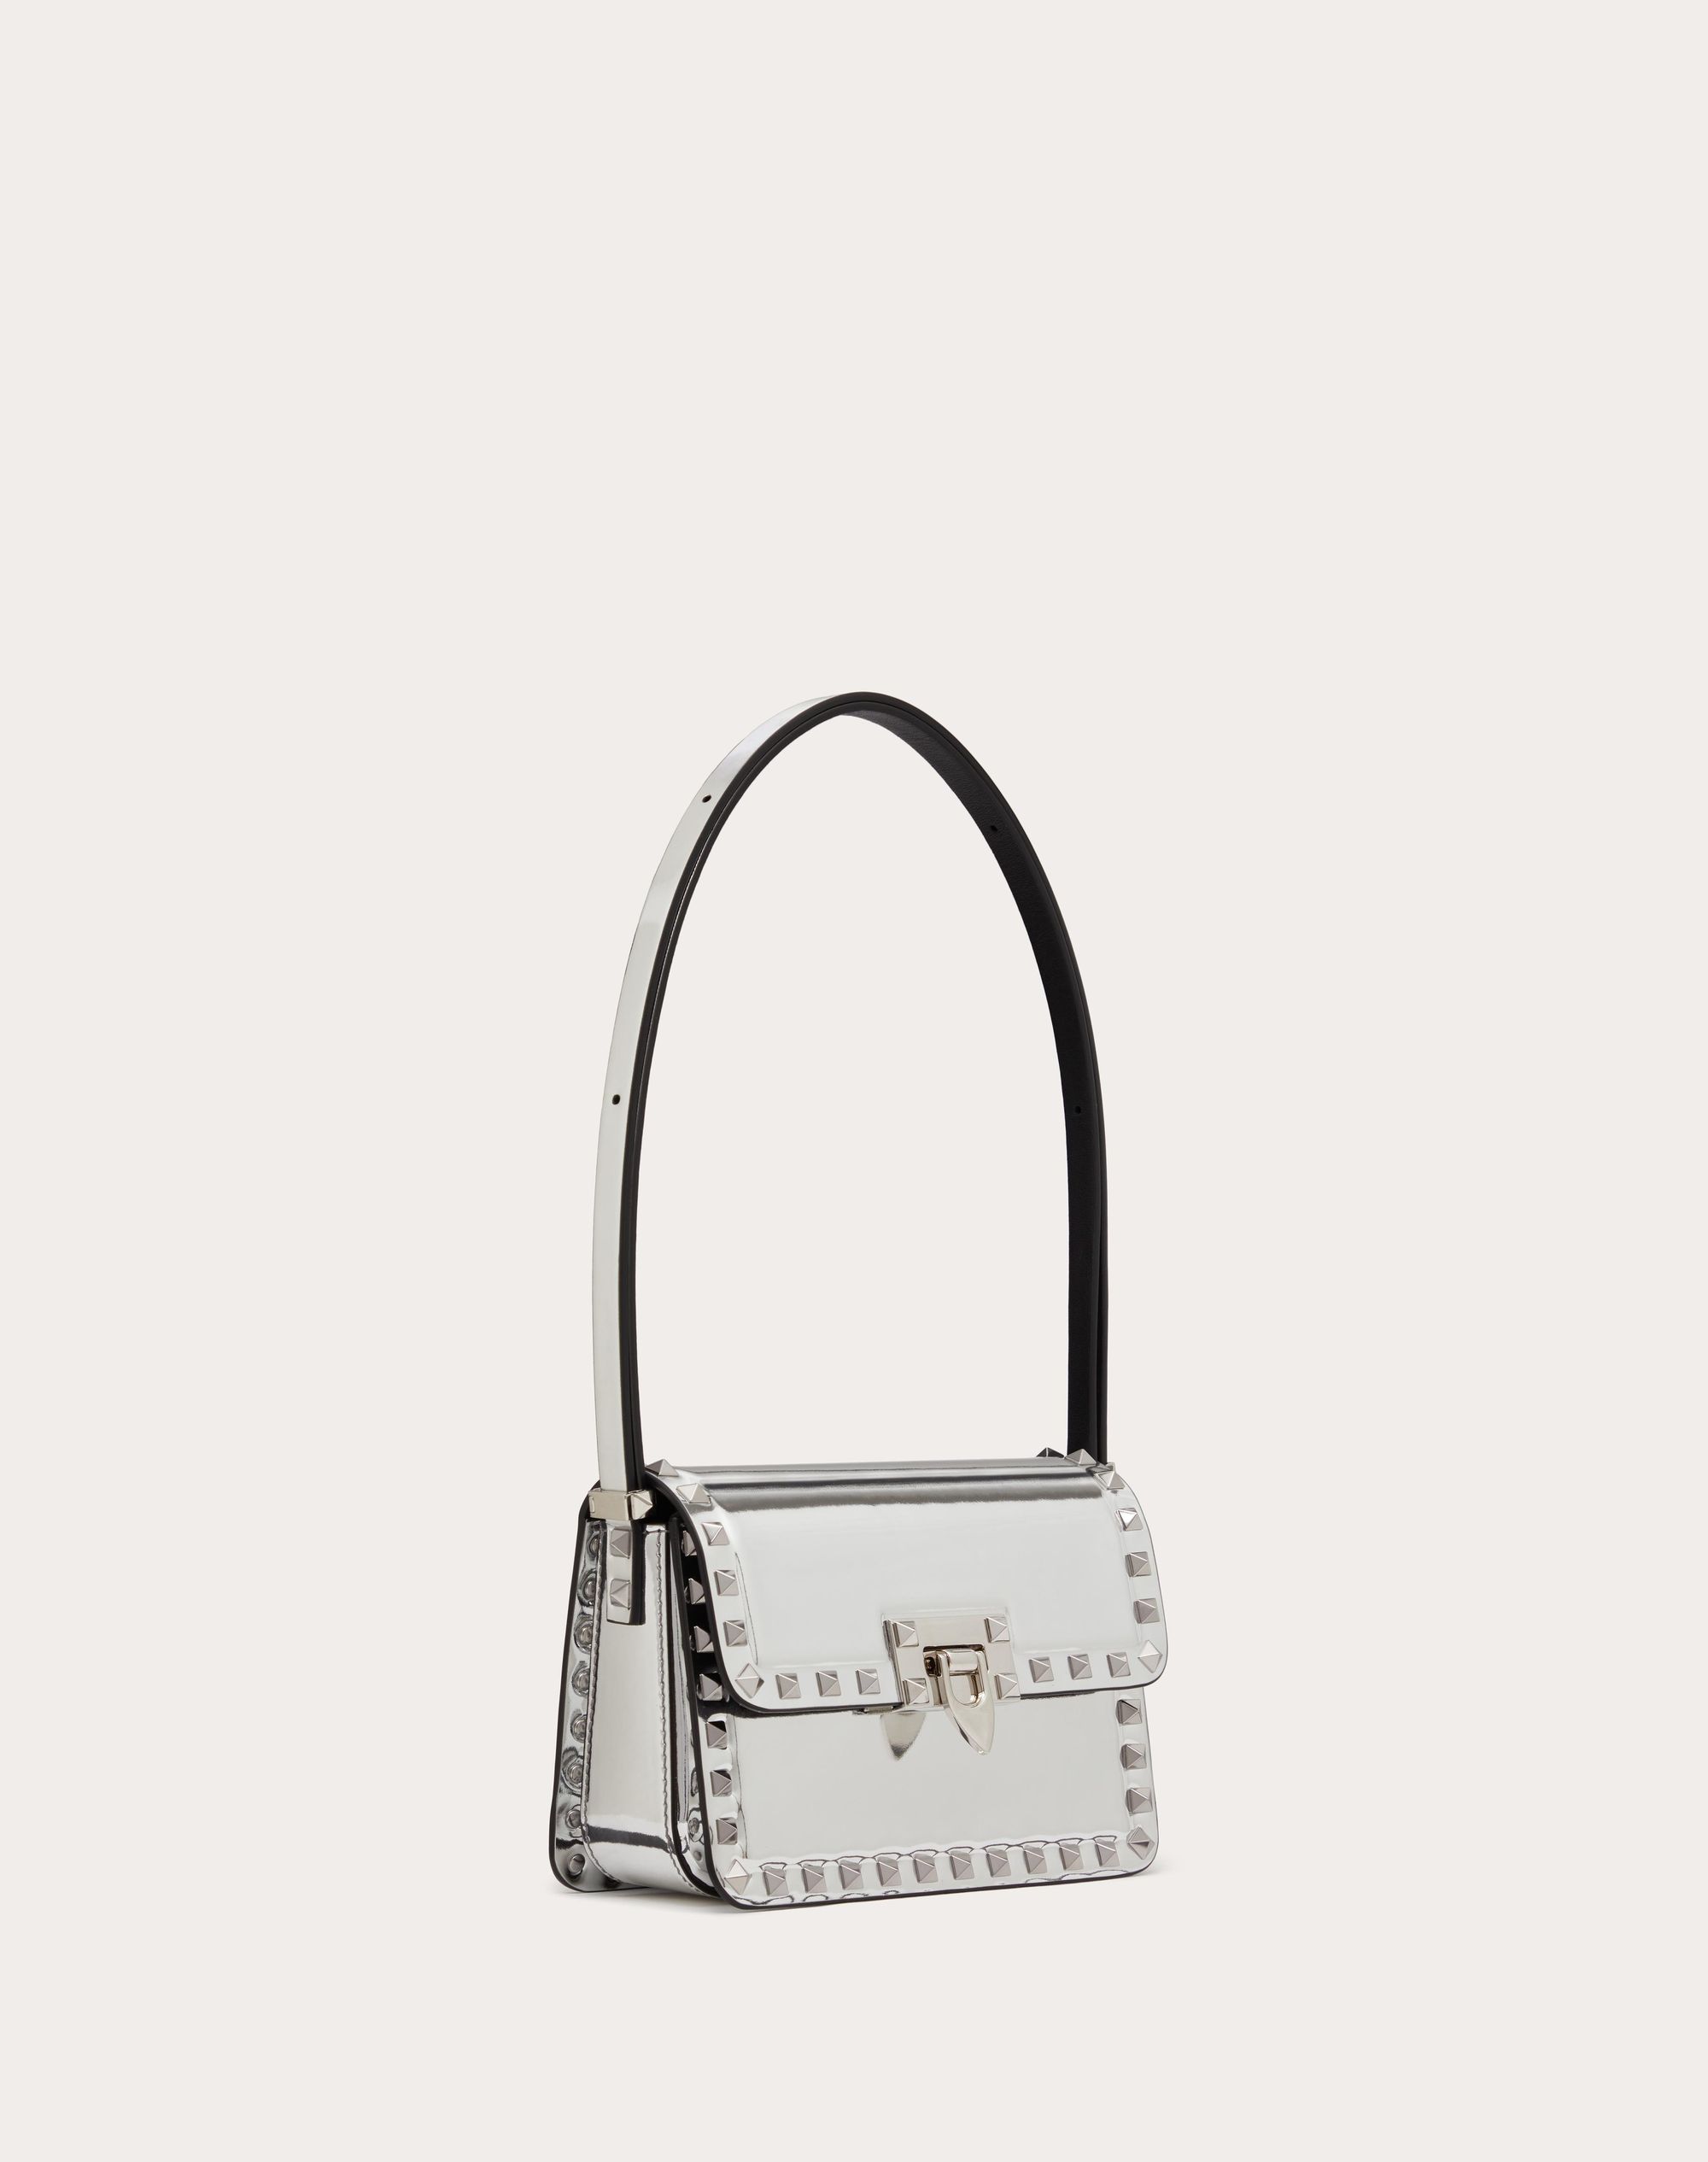 7 designer handbags to help you emerge into spring like a fabulous ...